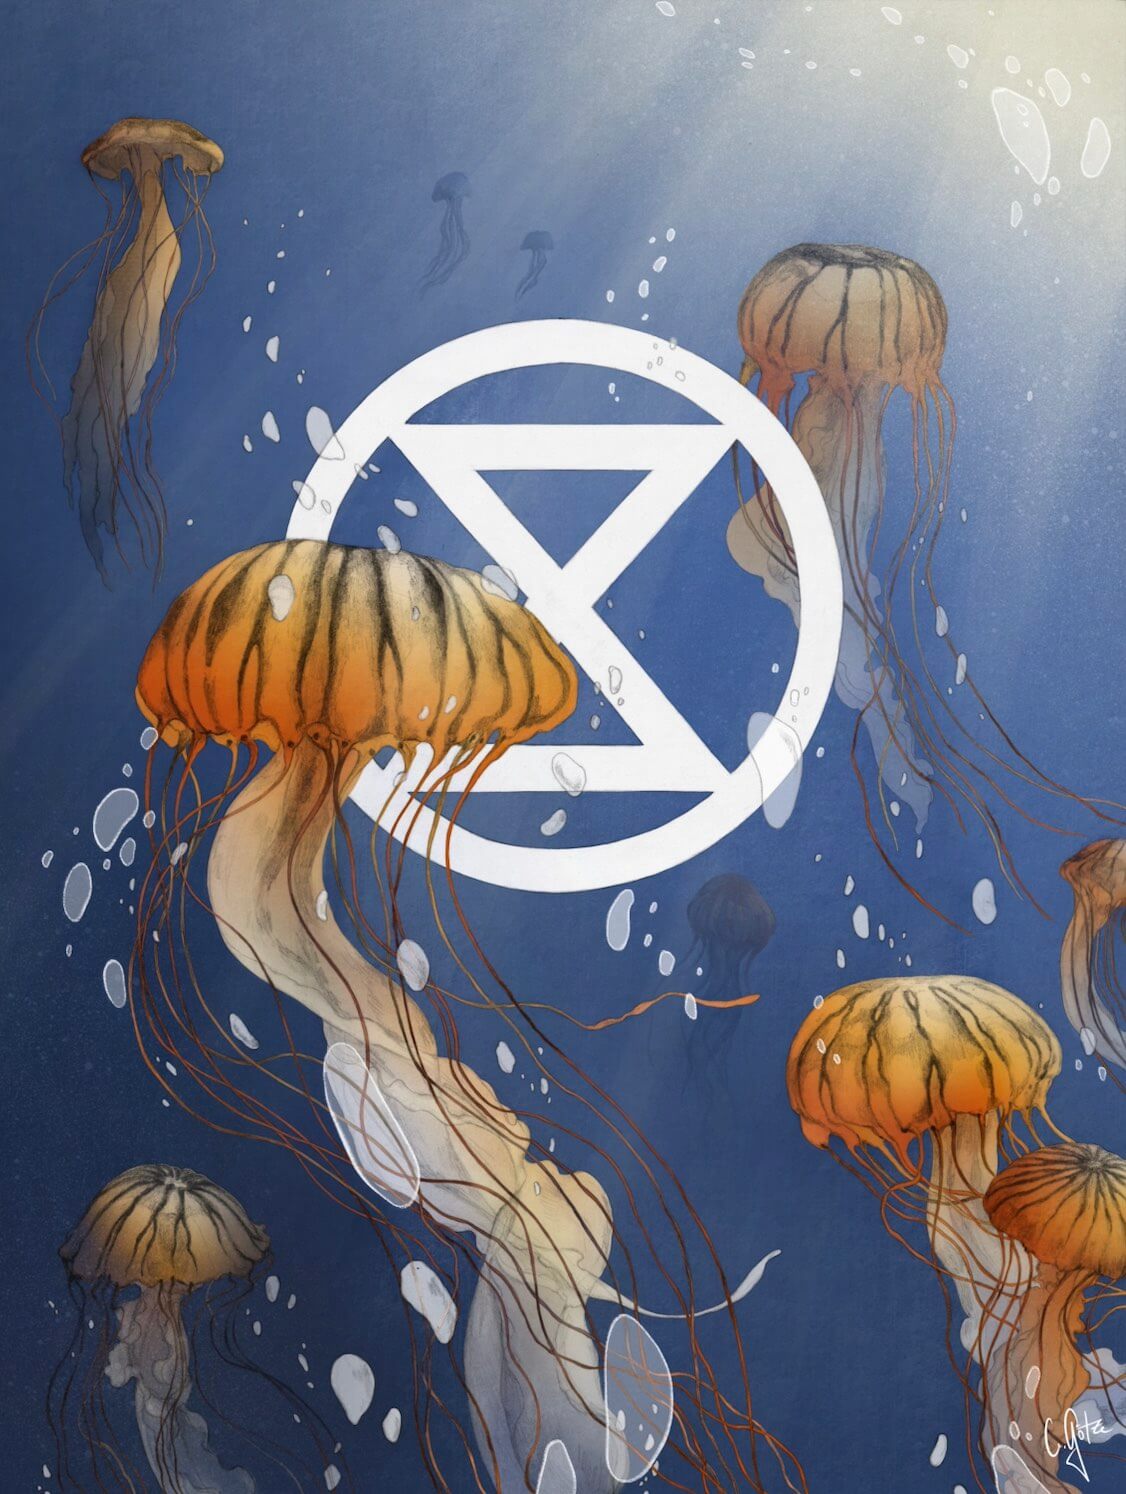 XR Symbol with jellyfish